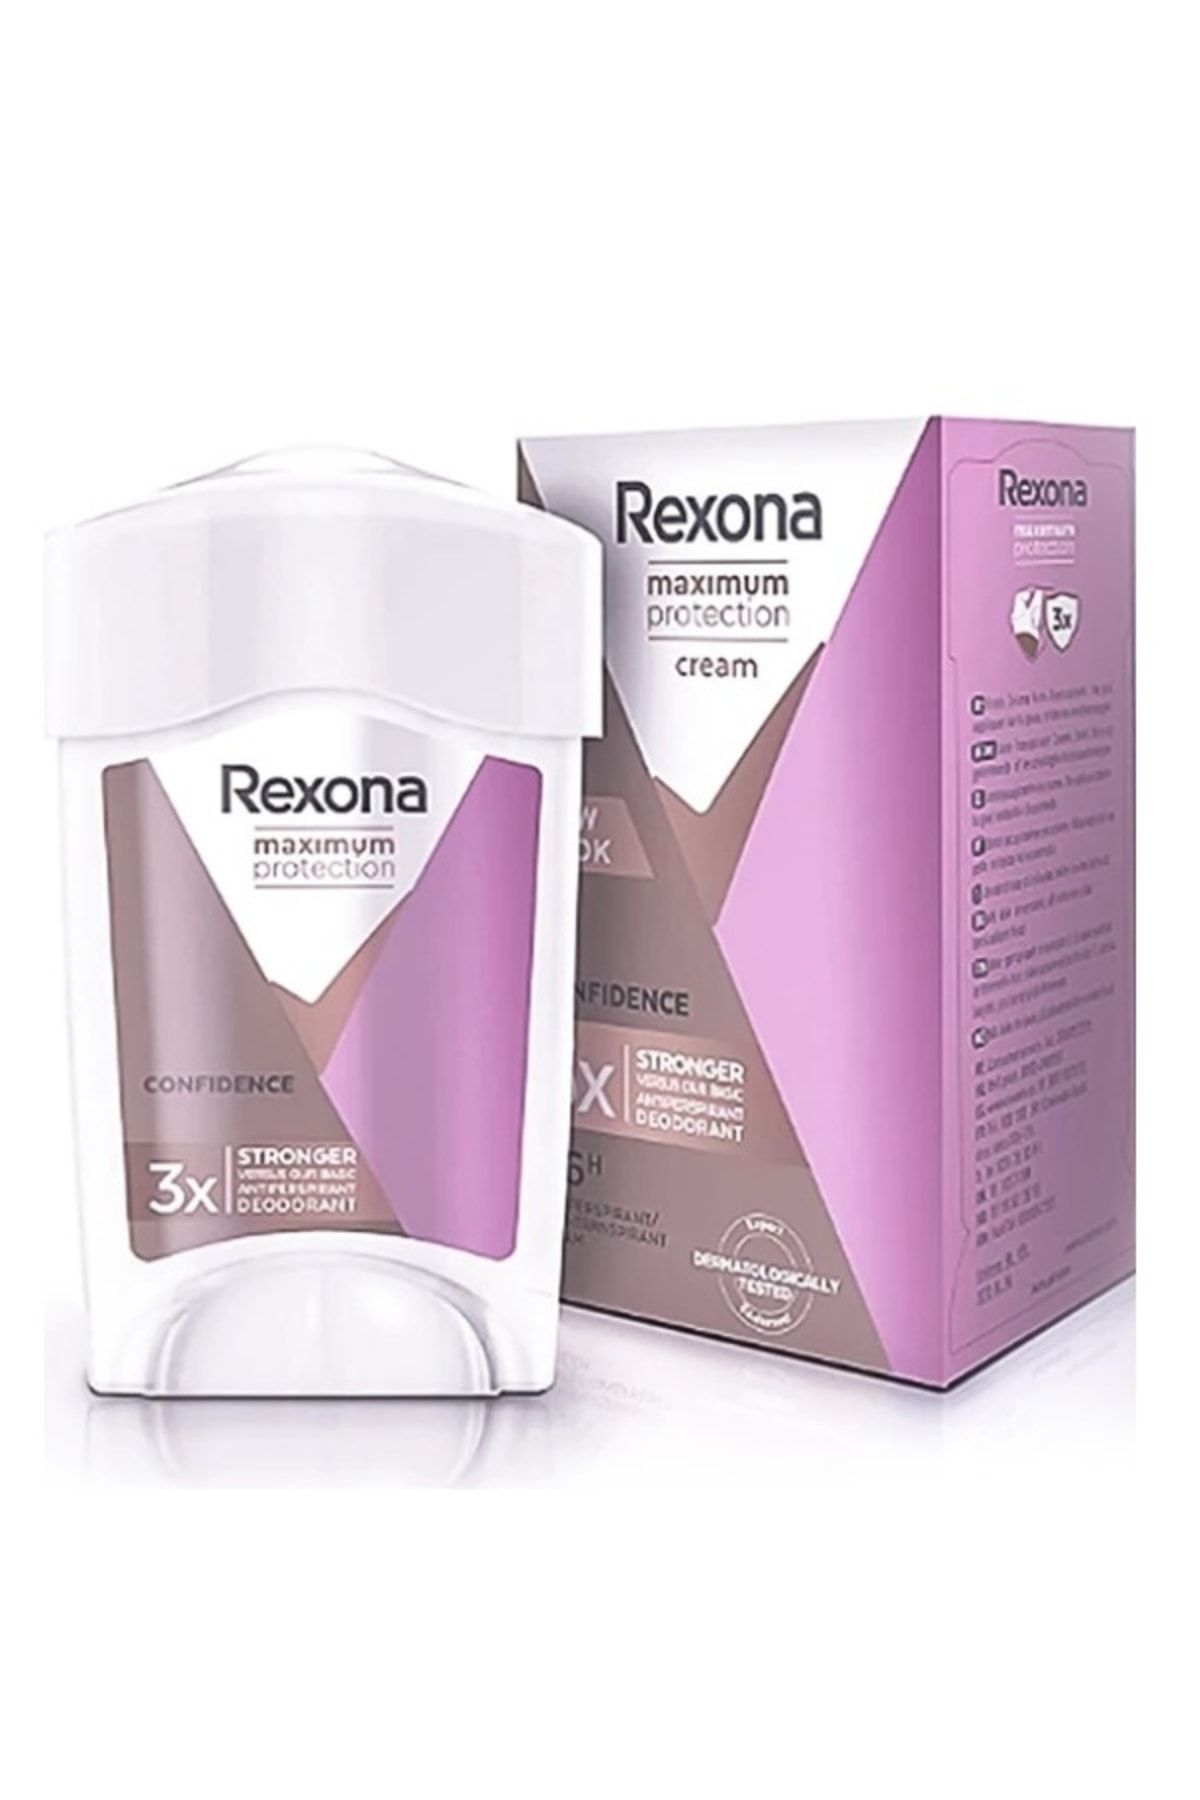 Rexona Clinical Protection Kadın Deodorant 150 Ml+stick Roll-on Maximum Protection Clent Scent 45 Ml